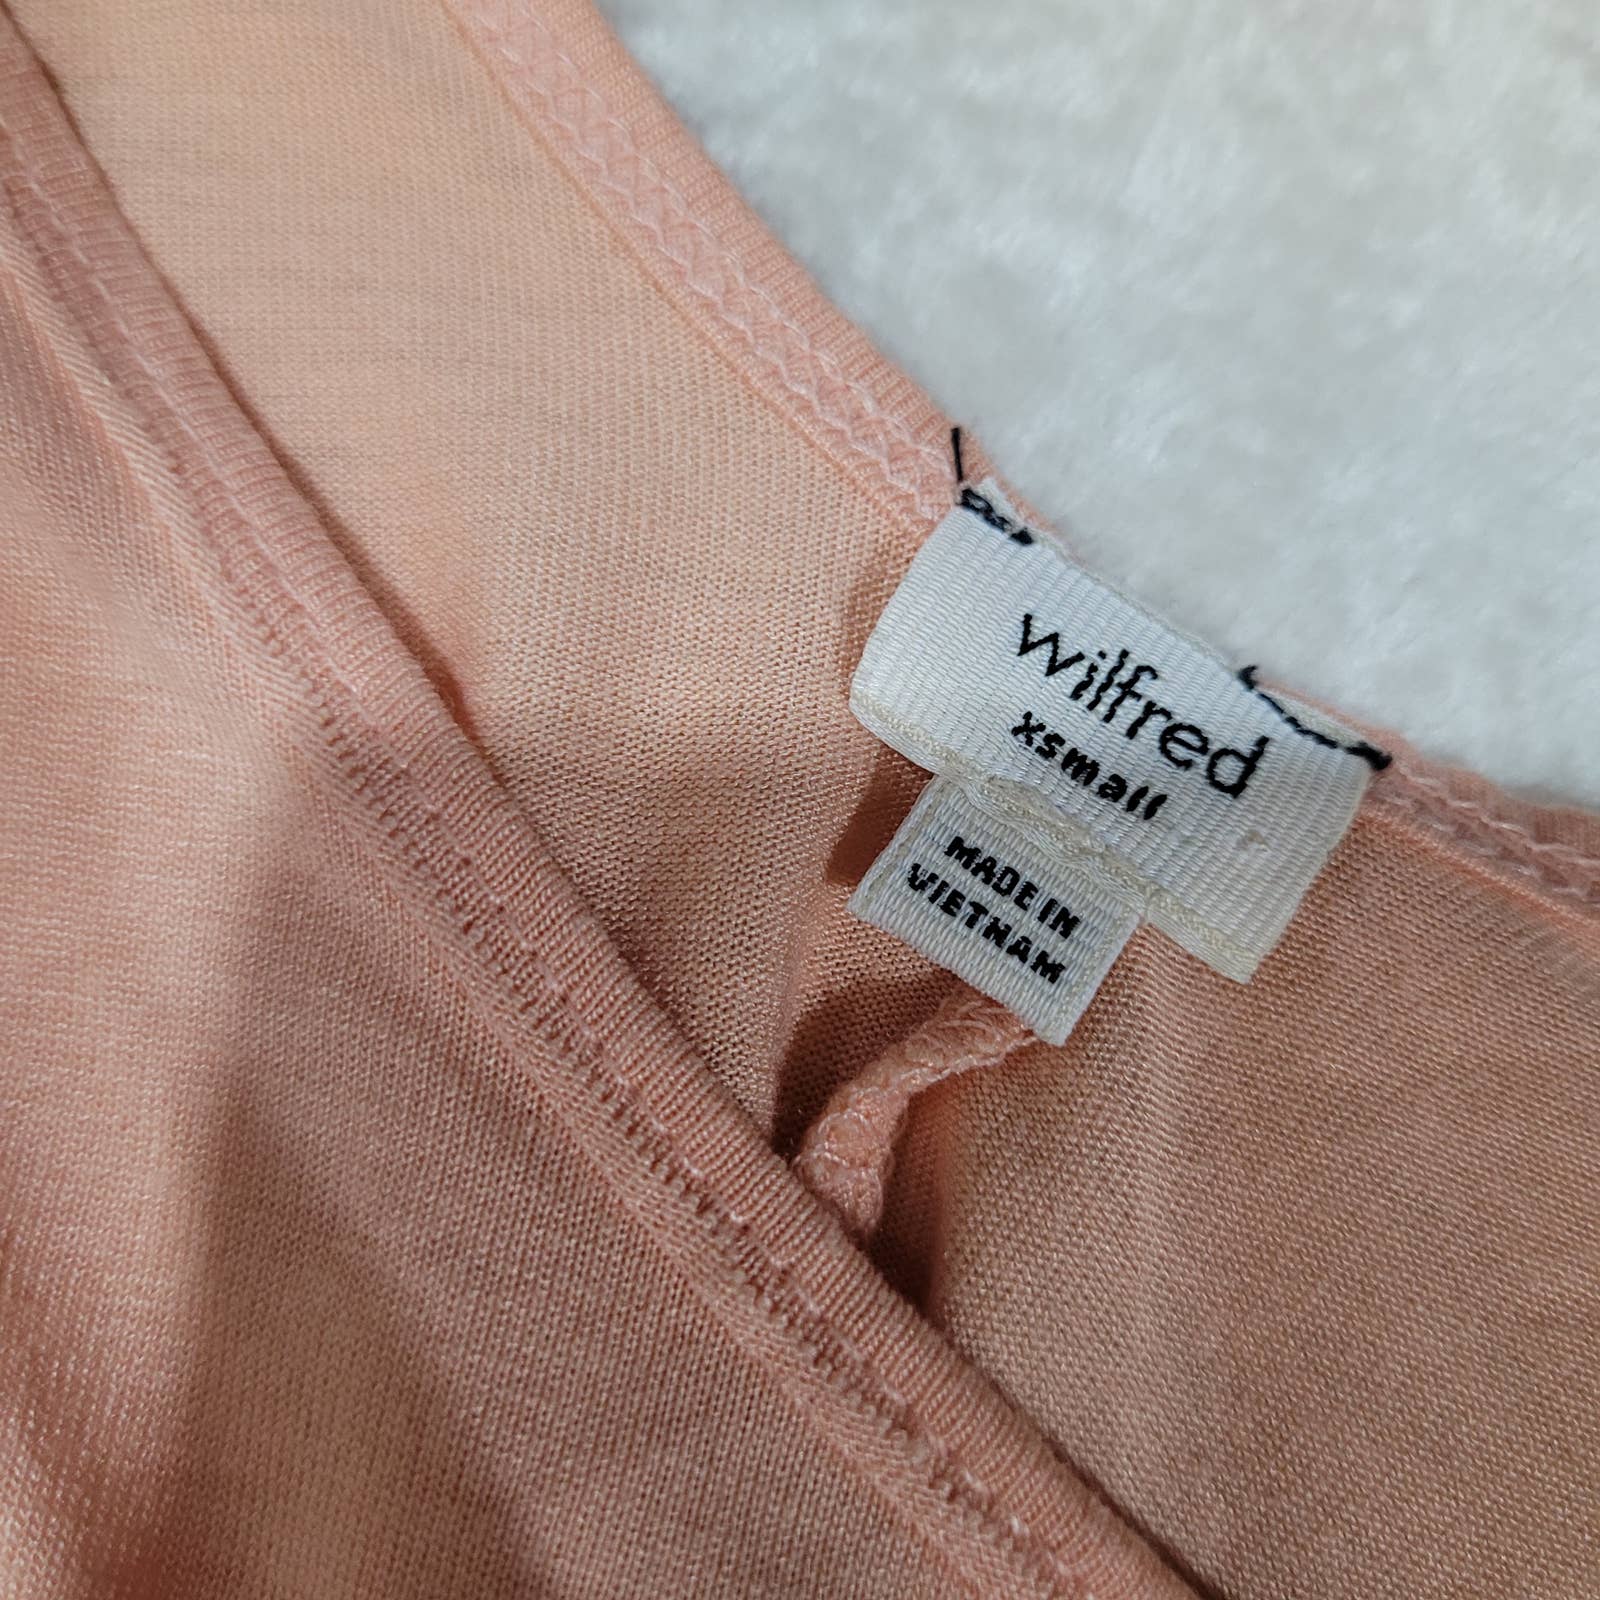 Wilfred Peach Dolman Sleeve T-Shirt with V-Neck Back - Size Extra SmallMarkita's ClosetAritzia